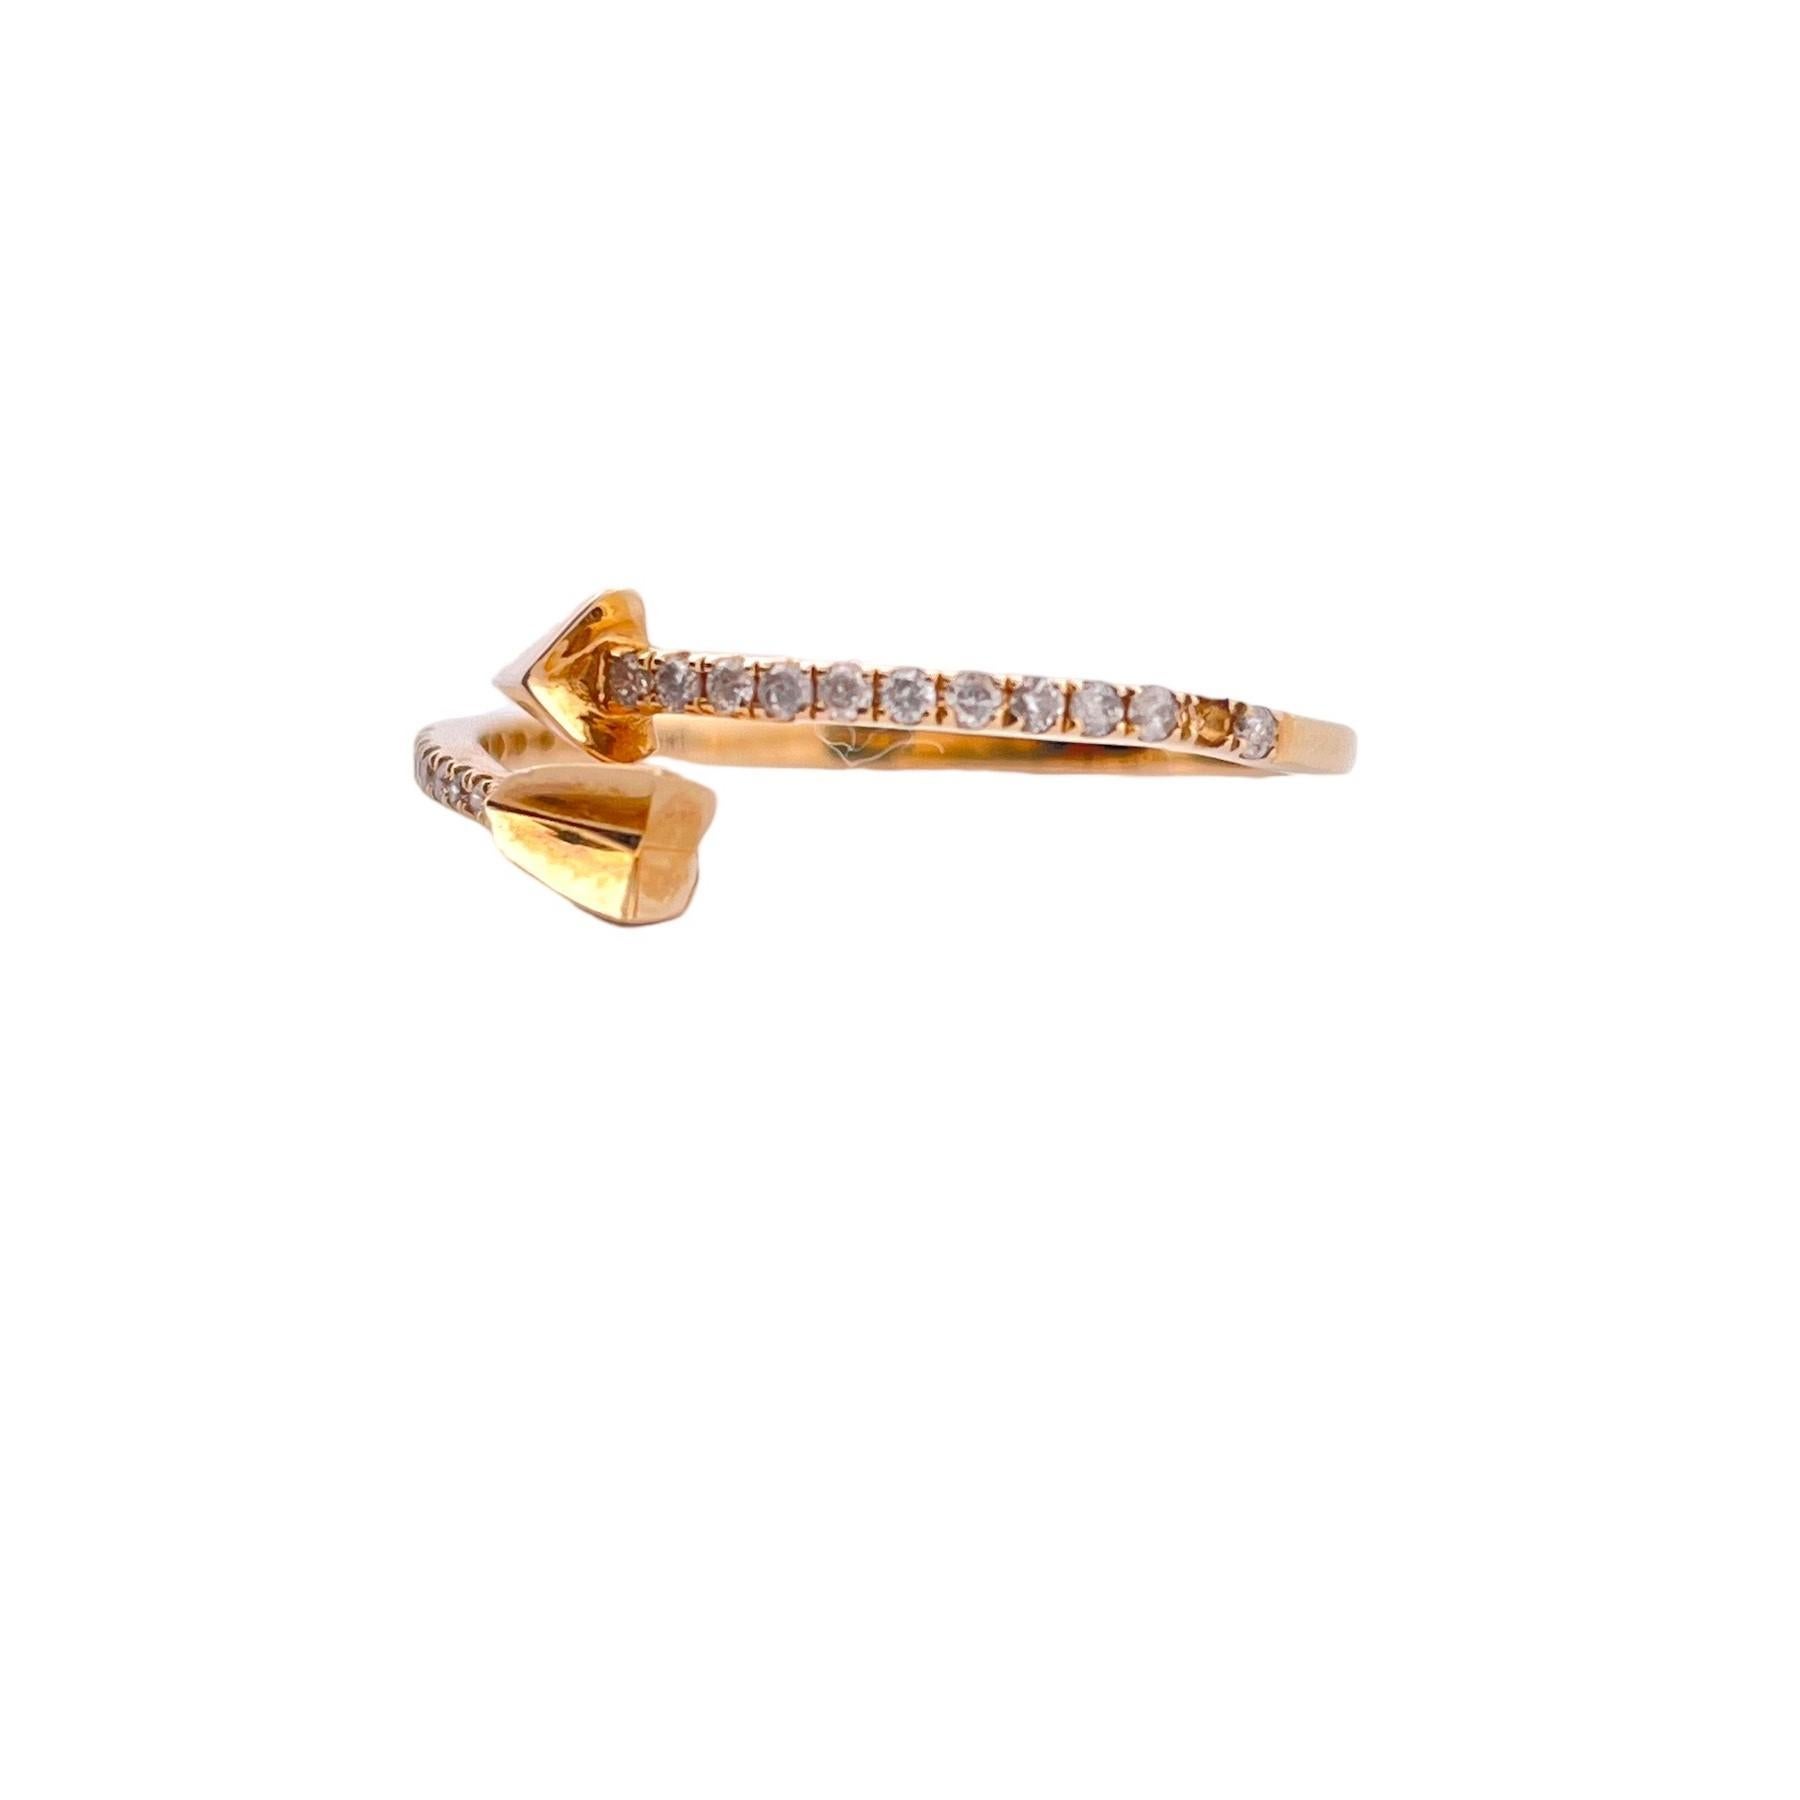 Uncut Arrow Diamond Ring - 14K Yellow Gold For Sale